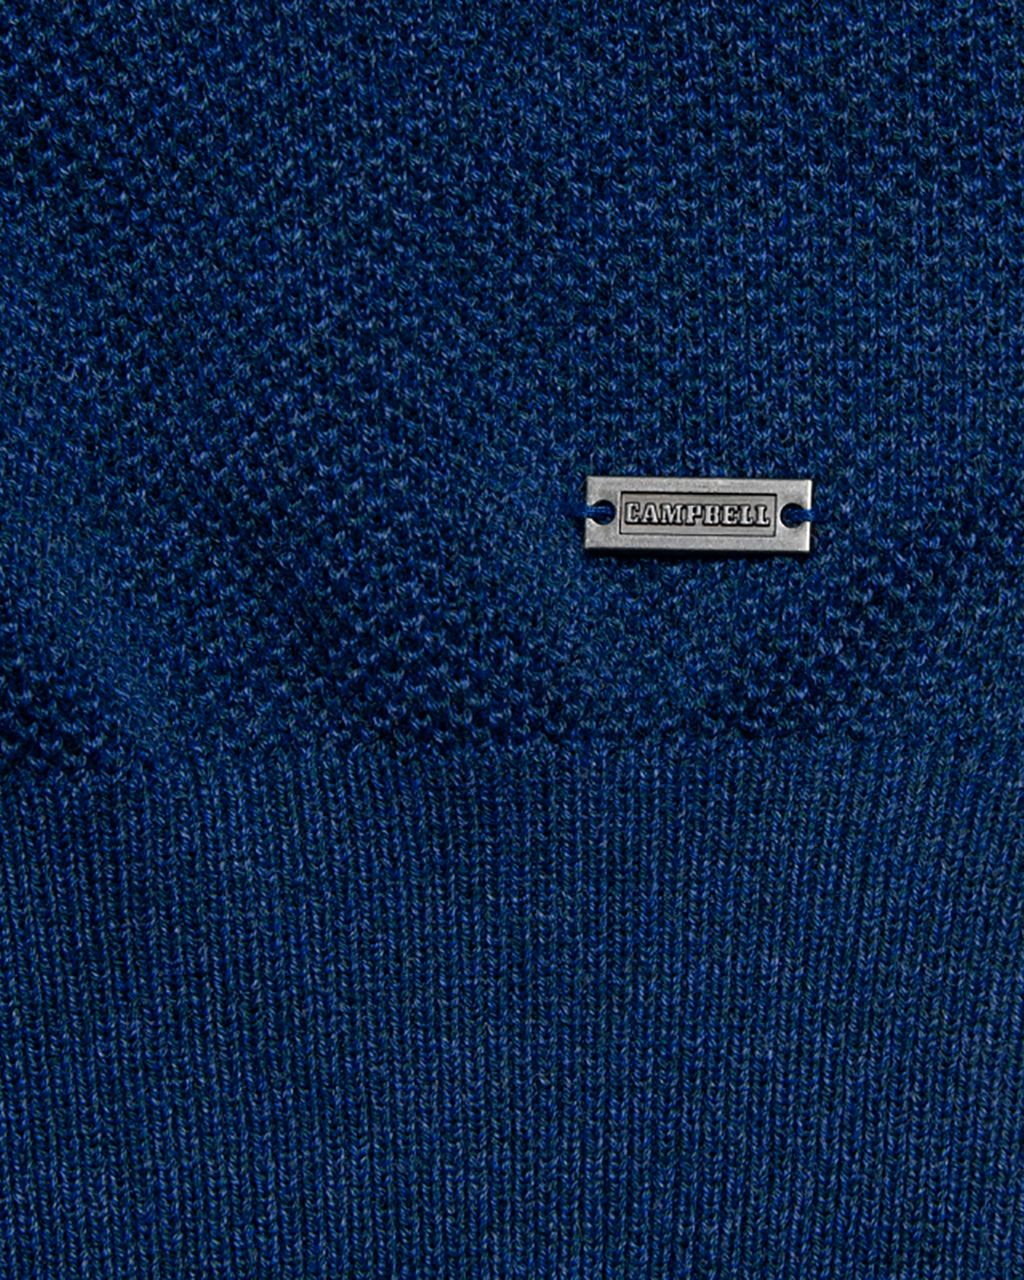 Campbell Classic Gresham Trui ronde hals Donkerblauw uni 067816-001-L